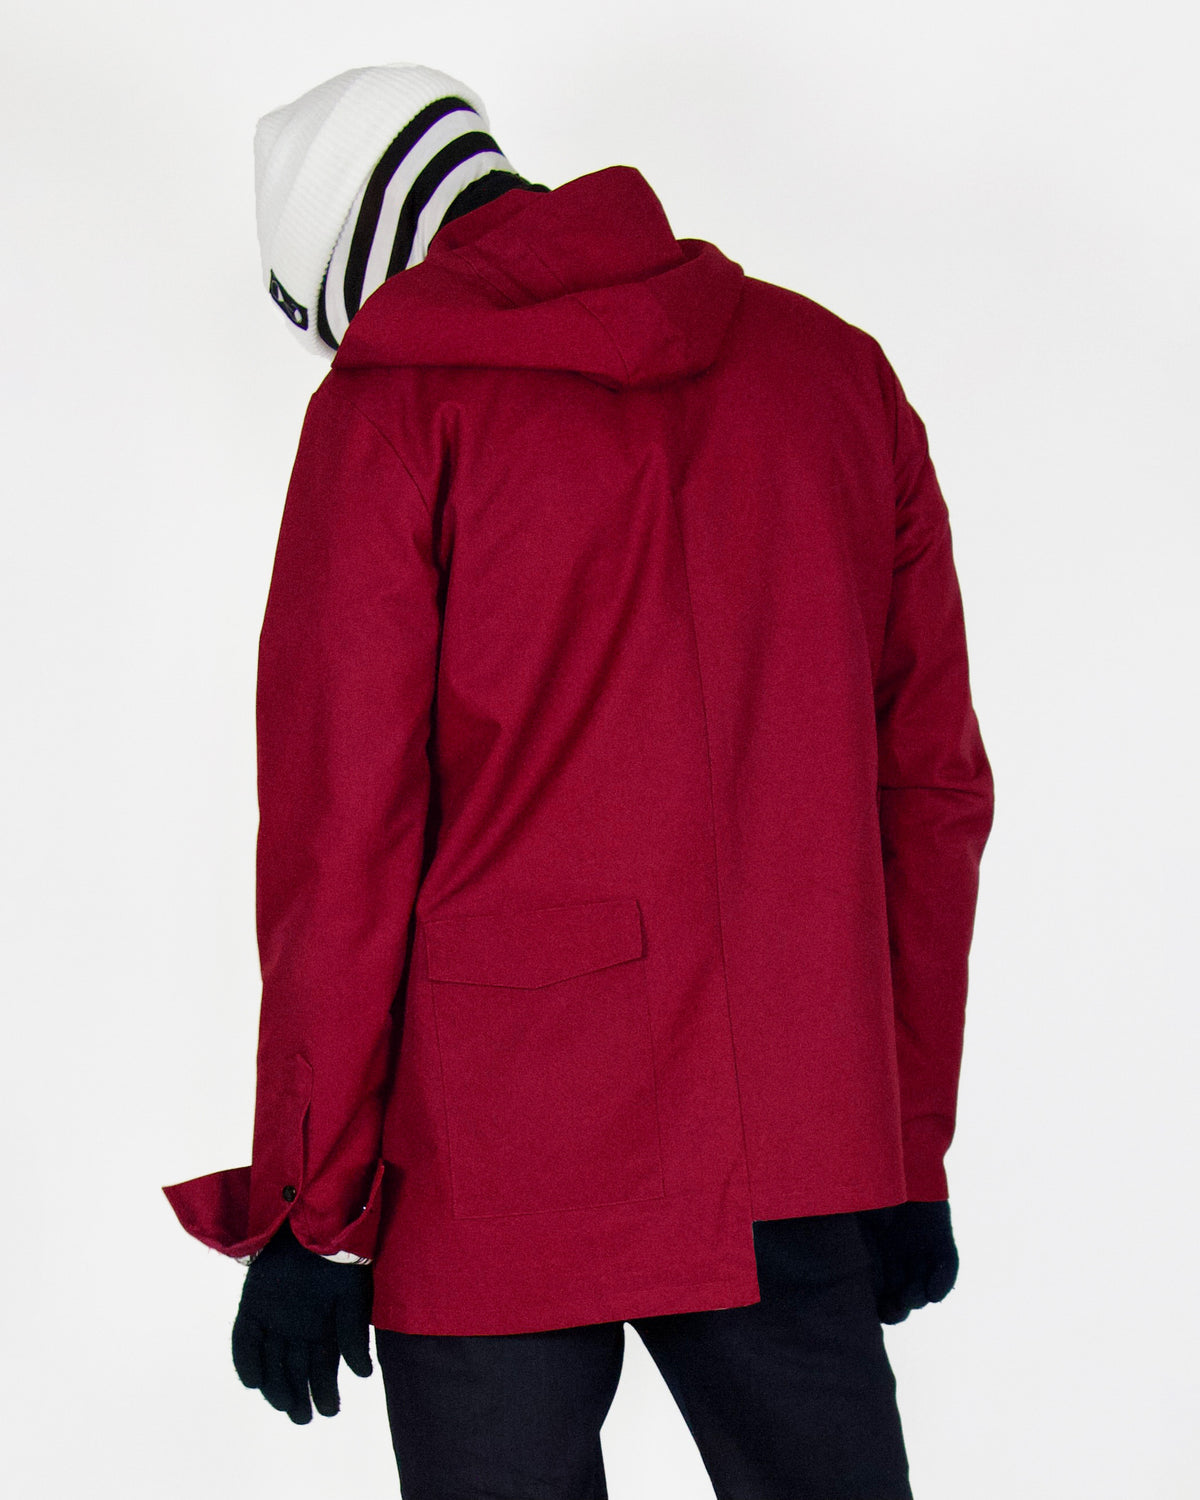 Chelsea Coat - Red